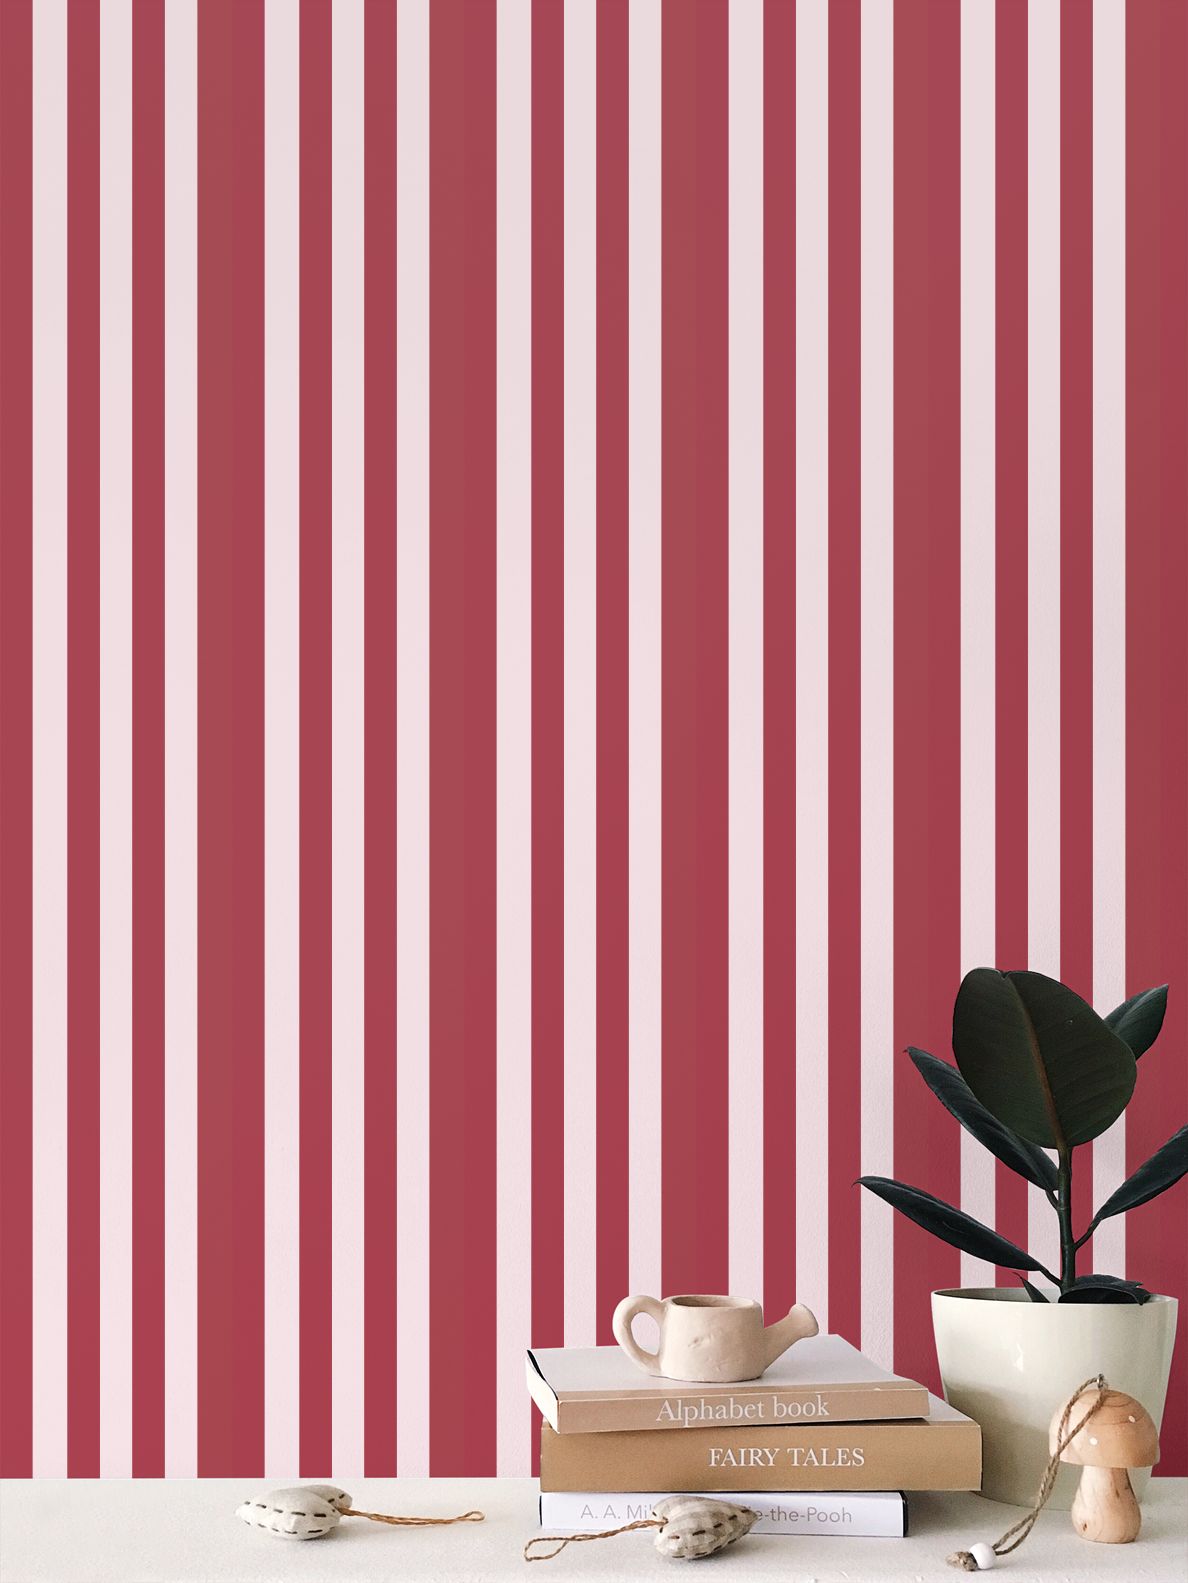 Classic pink stripe wallpaper design